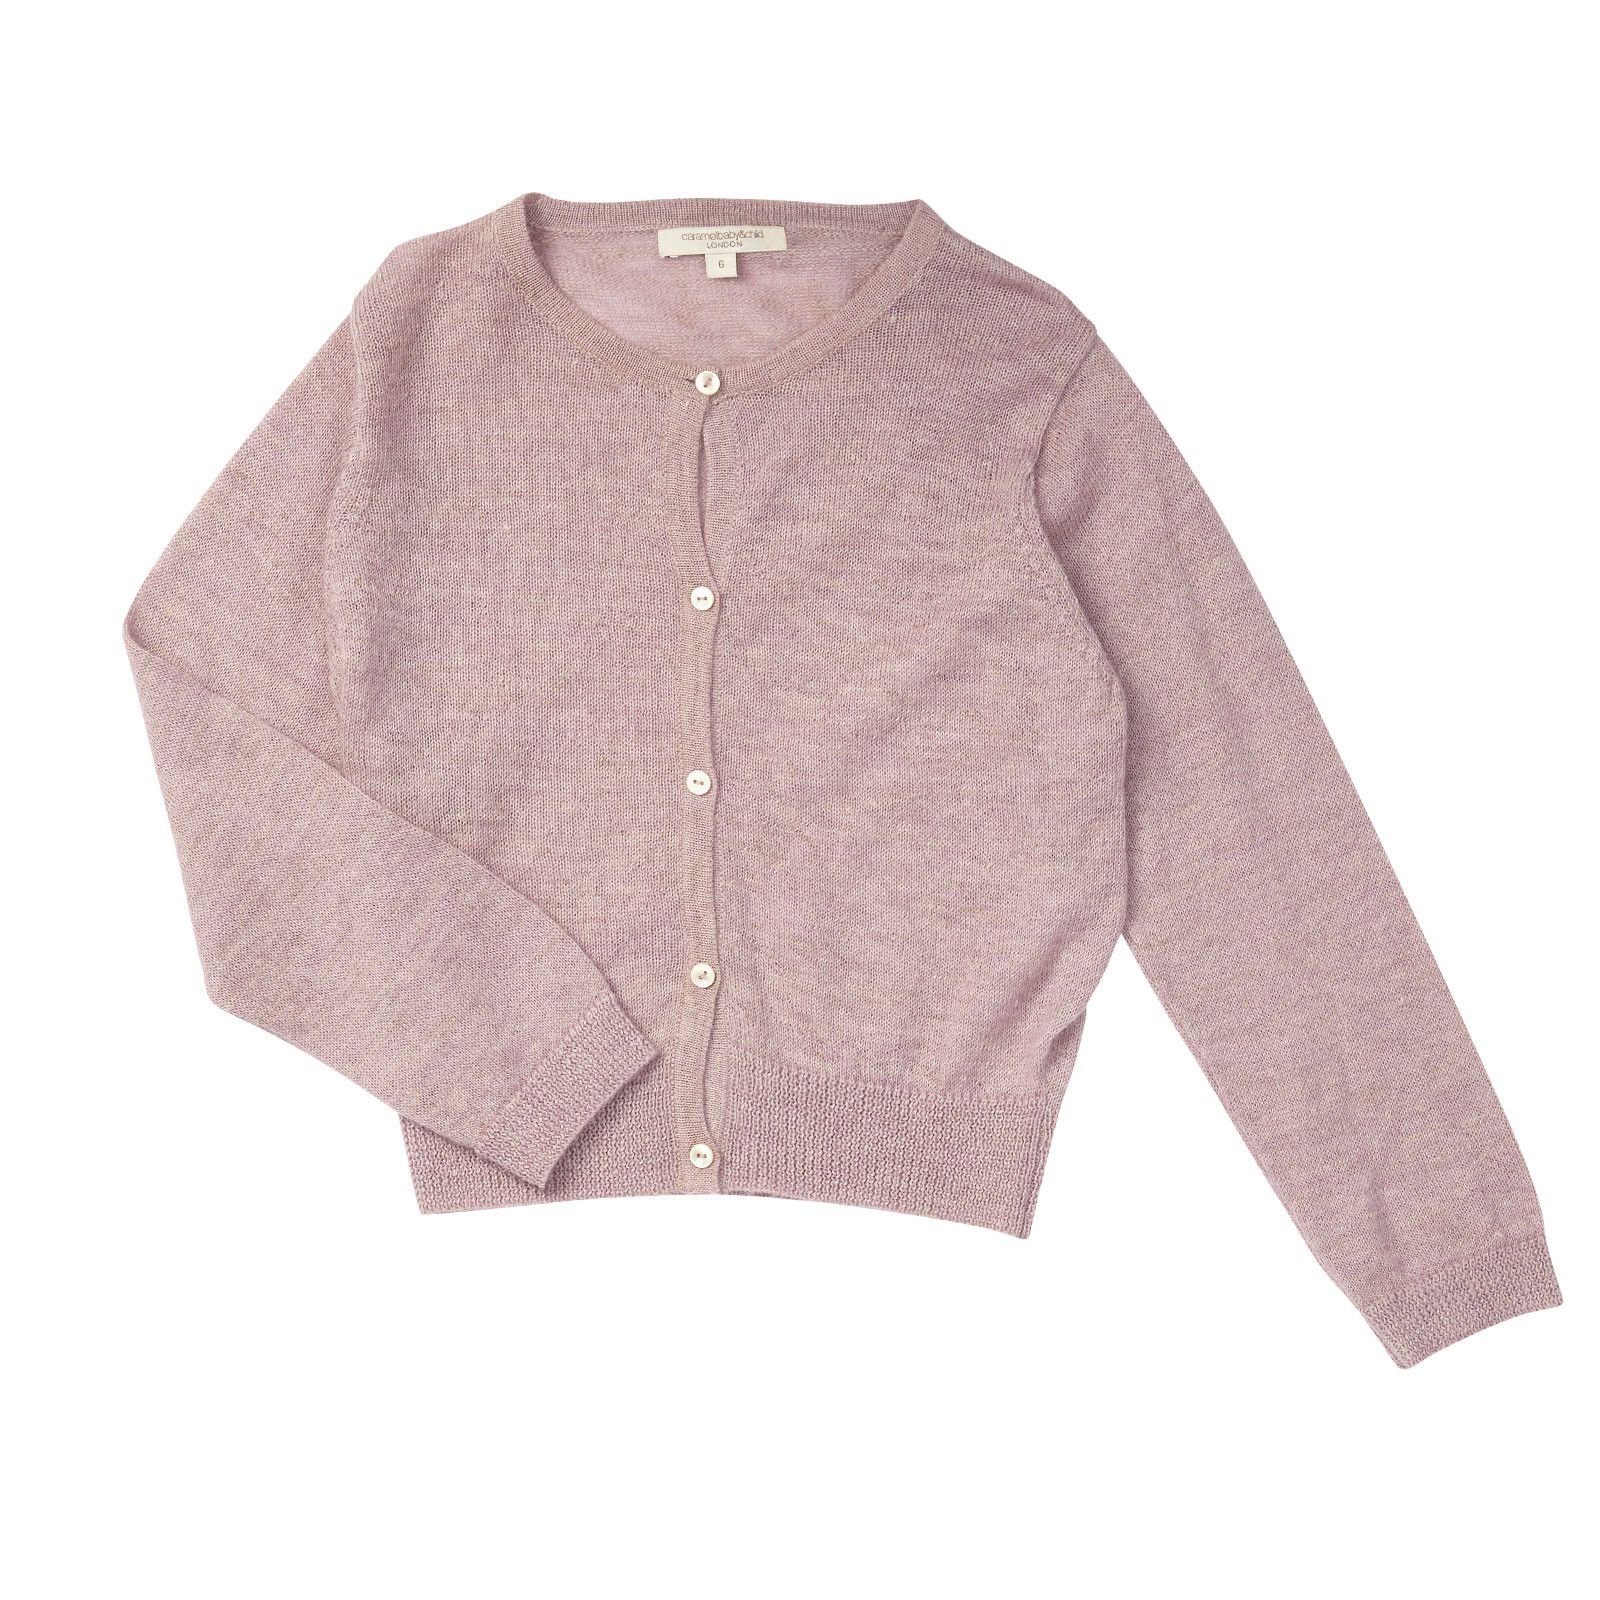 Boys Light Pink Wool Knitted Cardigan - CÉMAROSE | Children's Fashion Store